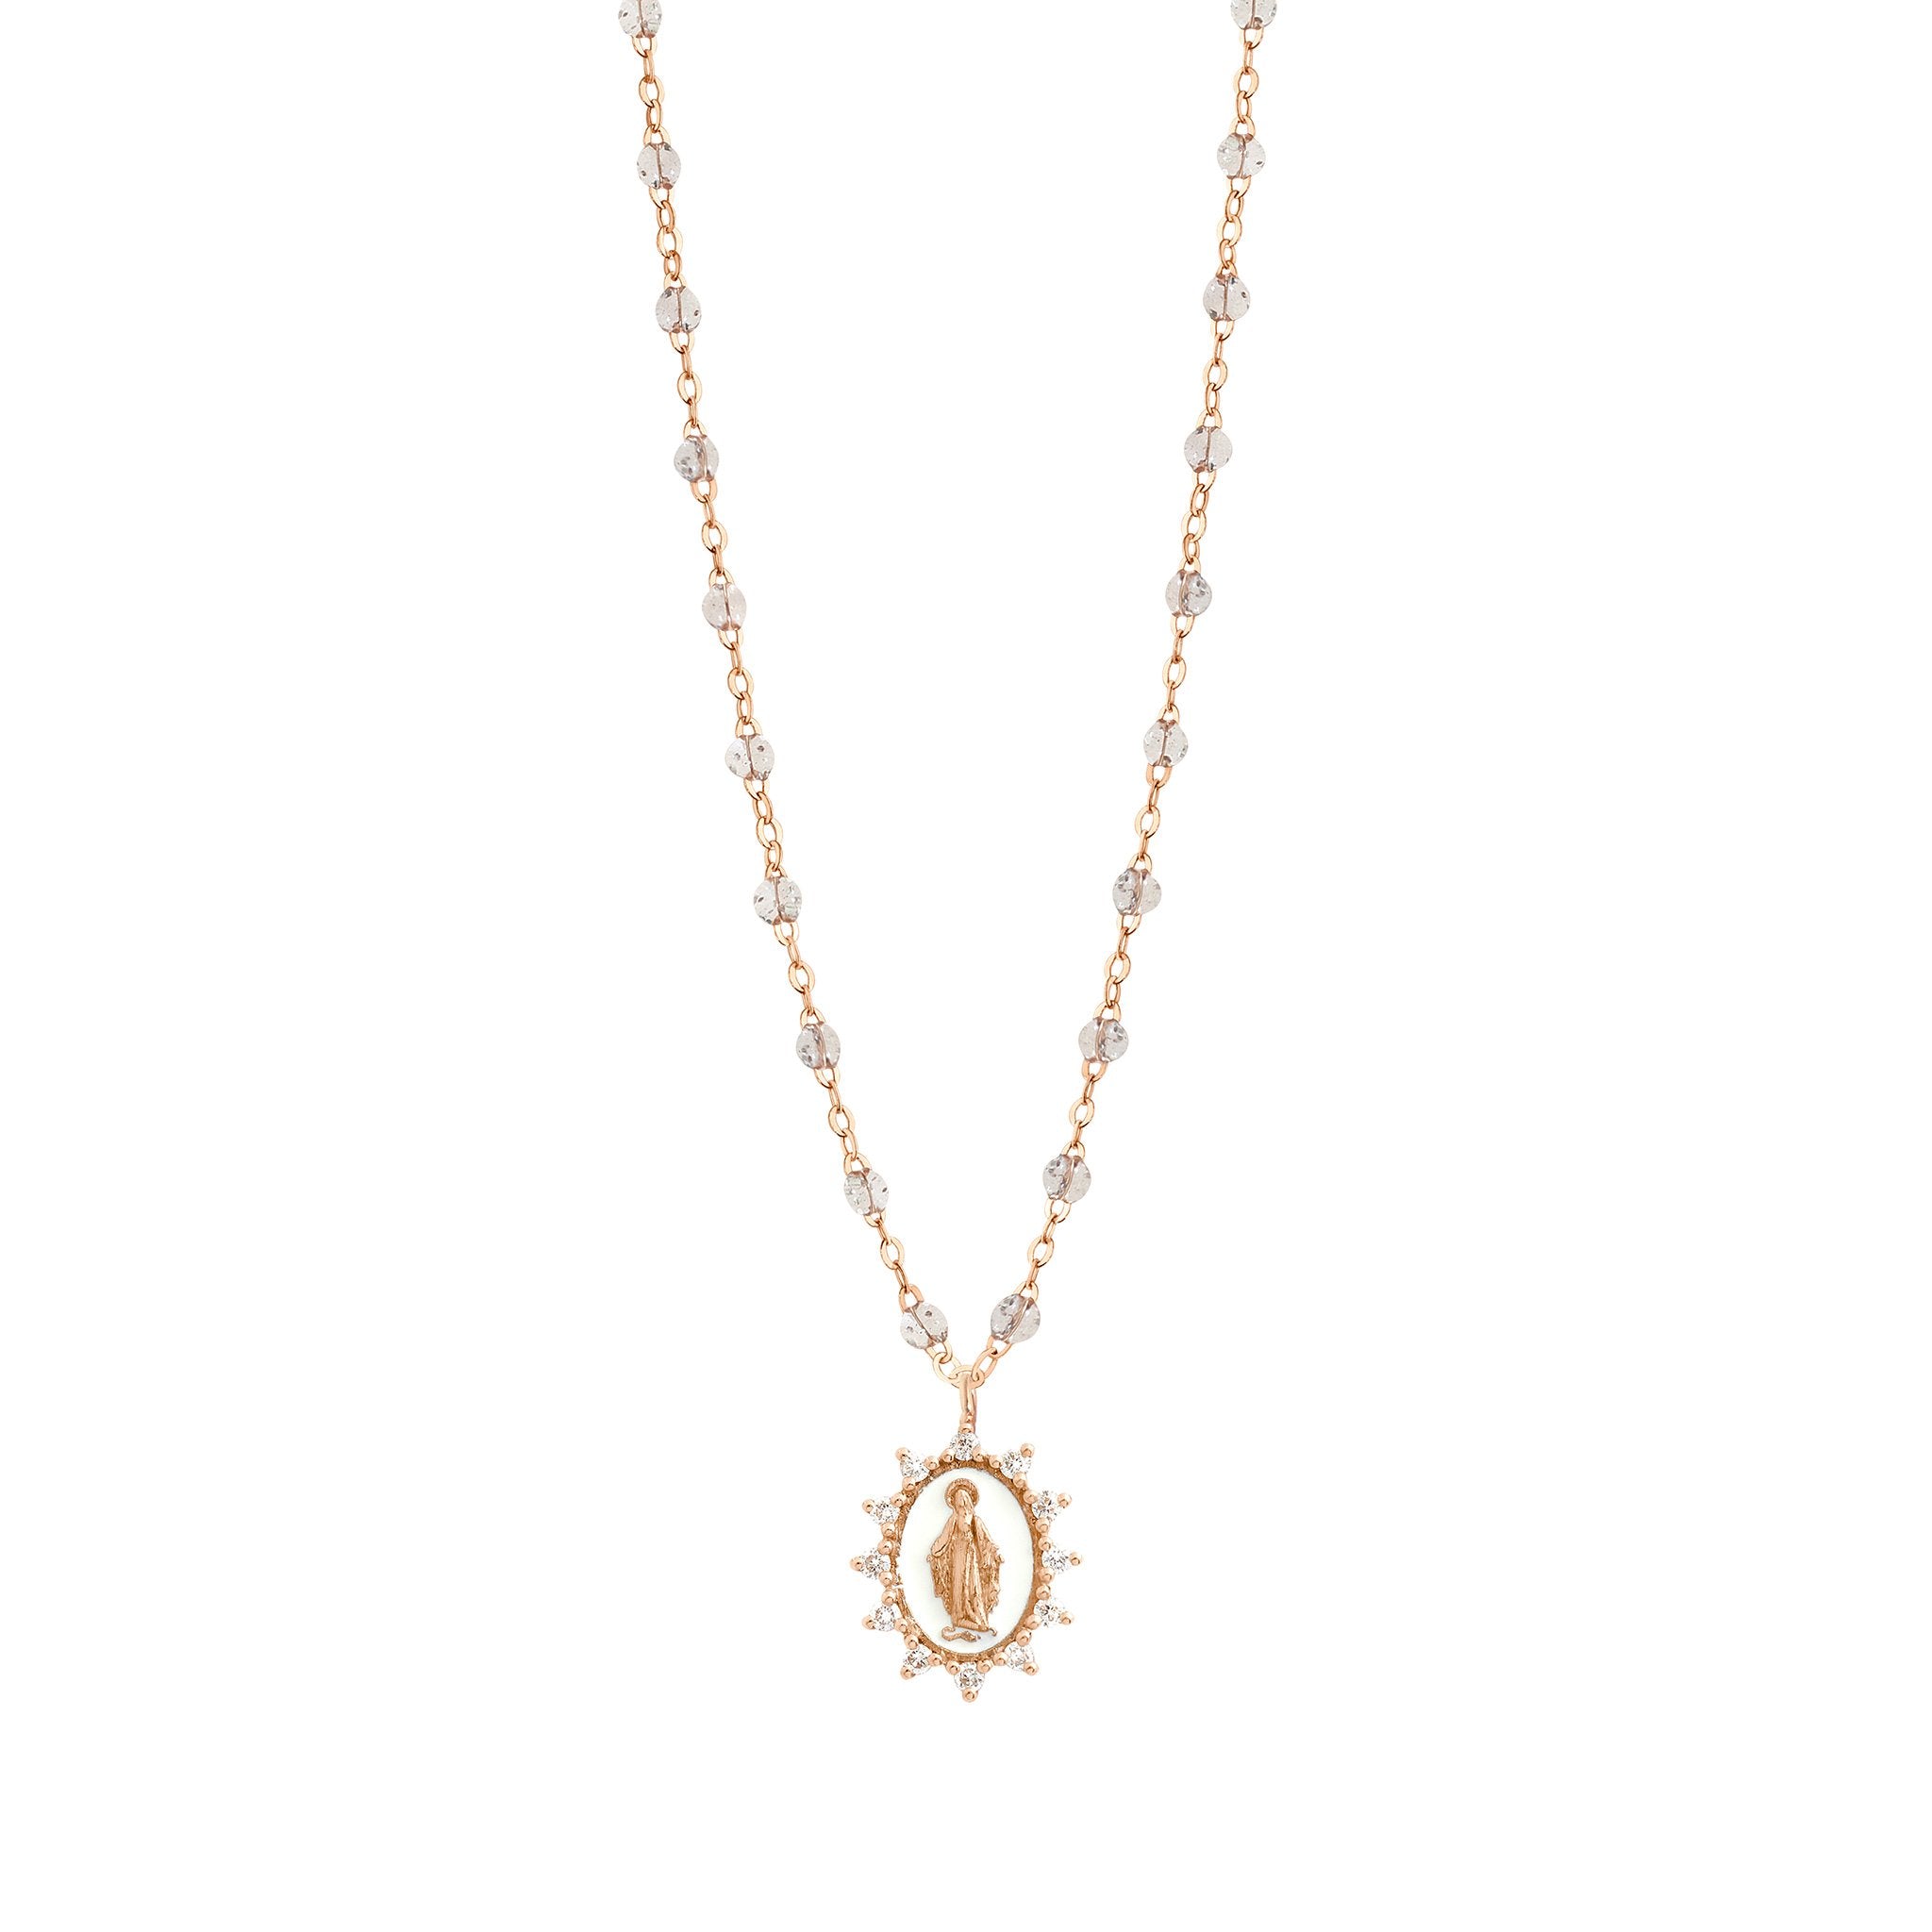 Collier Sparkle Petite Madone Suprême blanche, diamants, or rose, 42 cm madone suprême Référence :  b1vi016r0142di -1